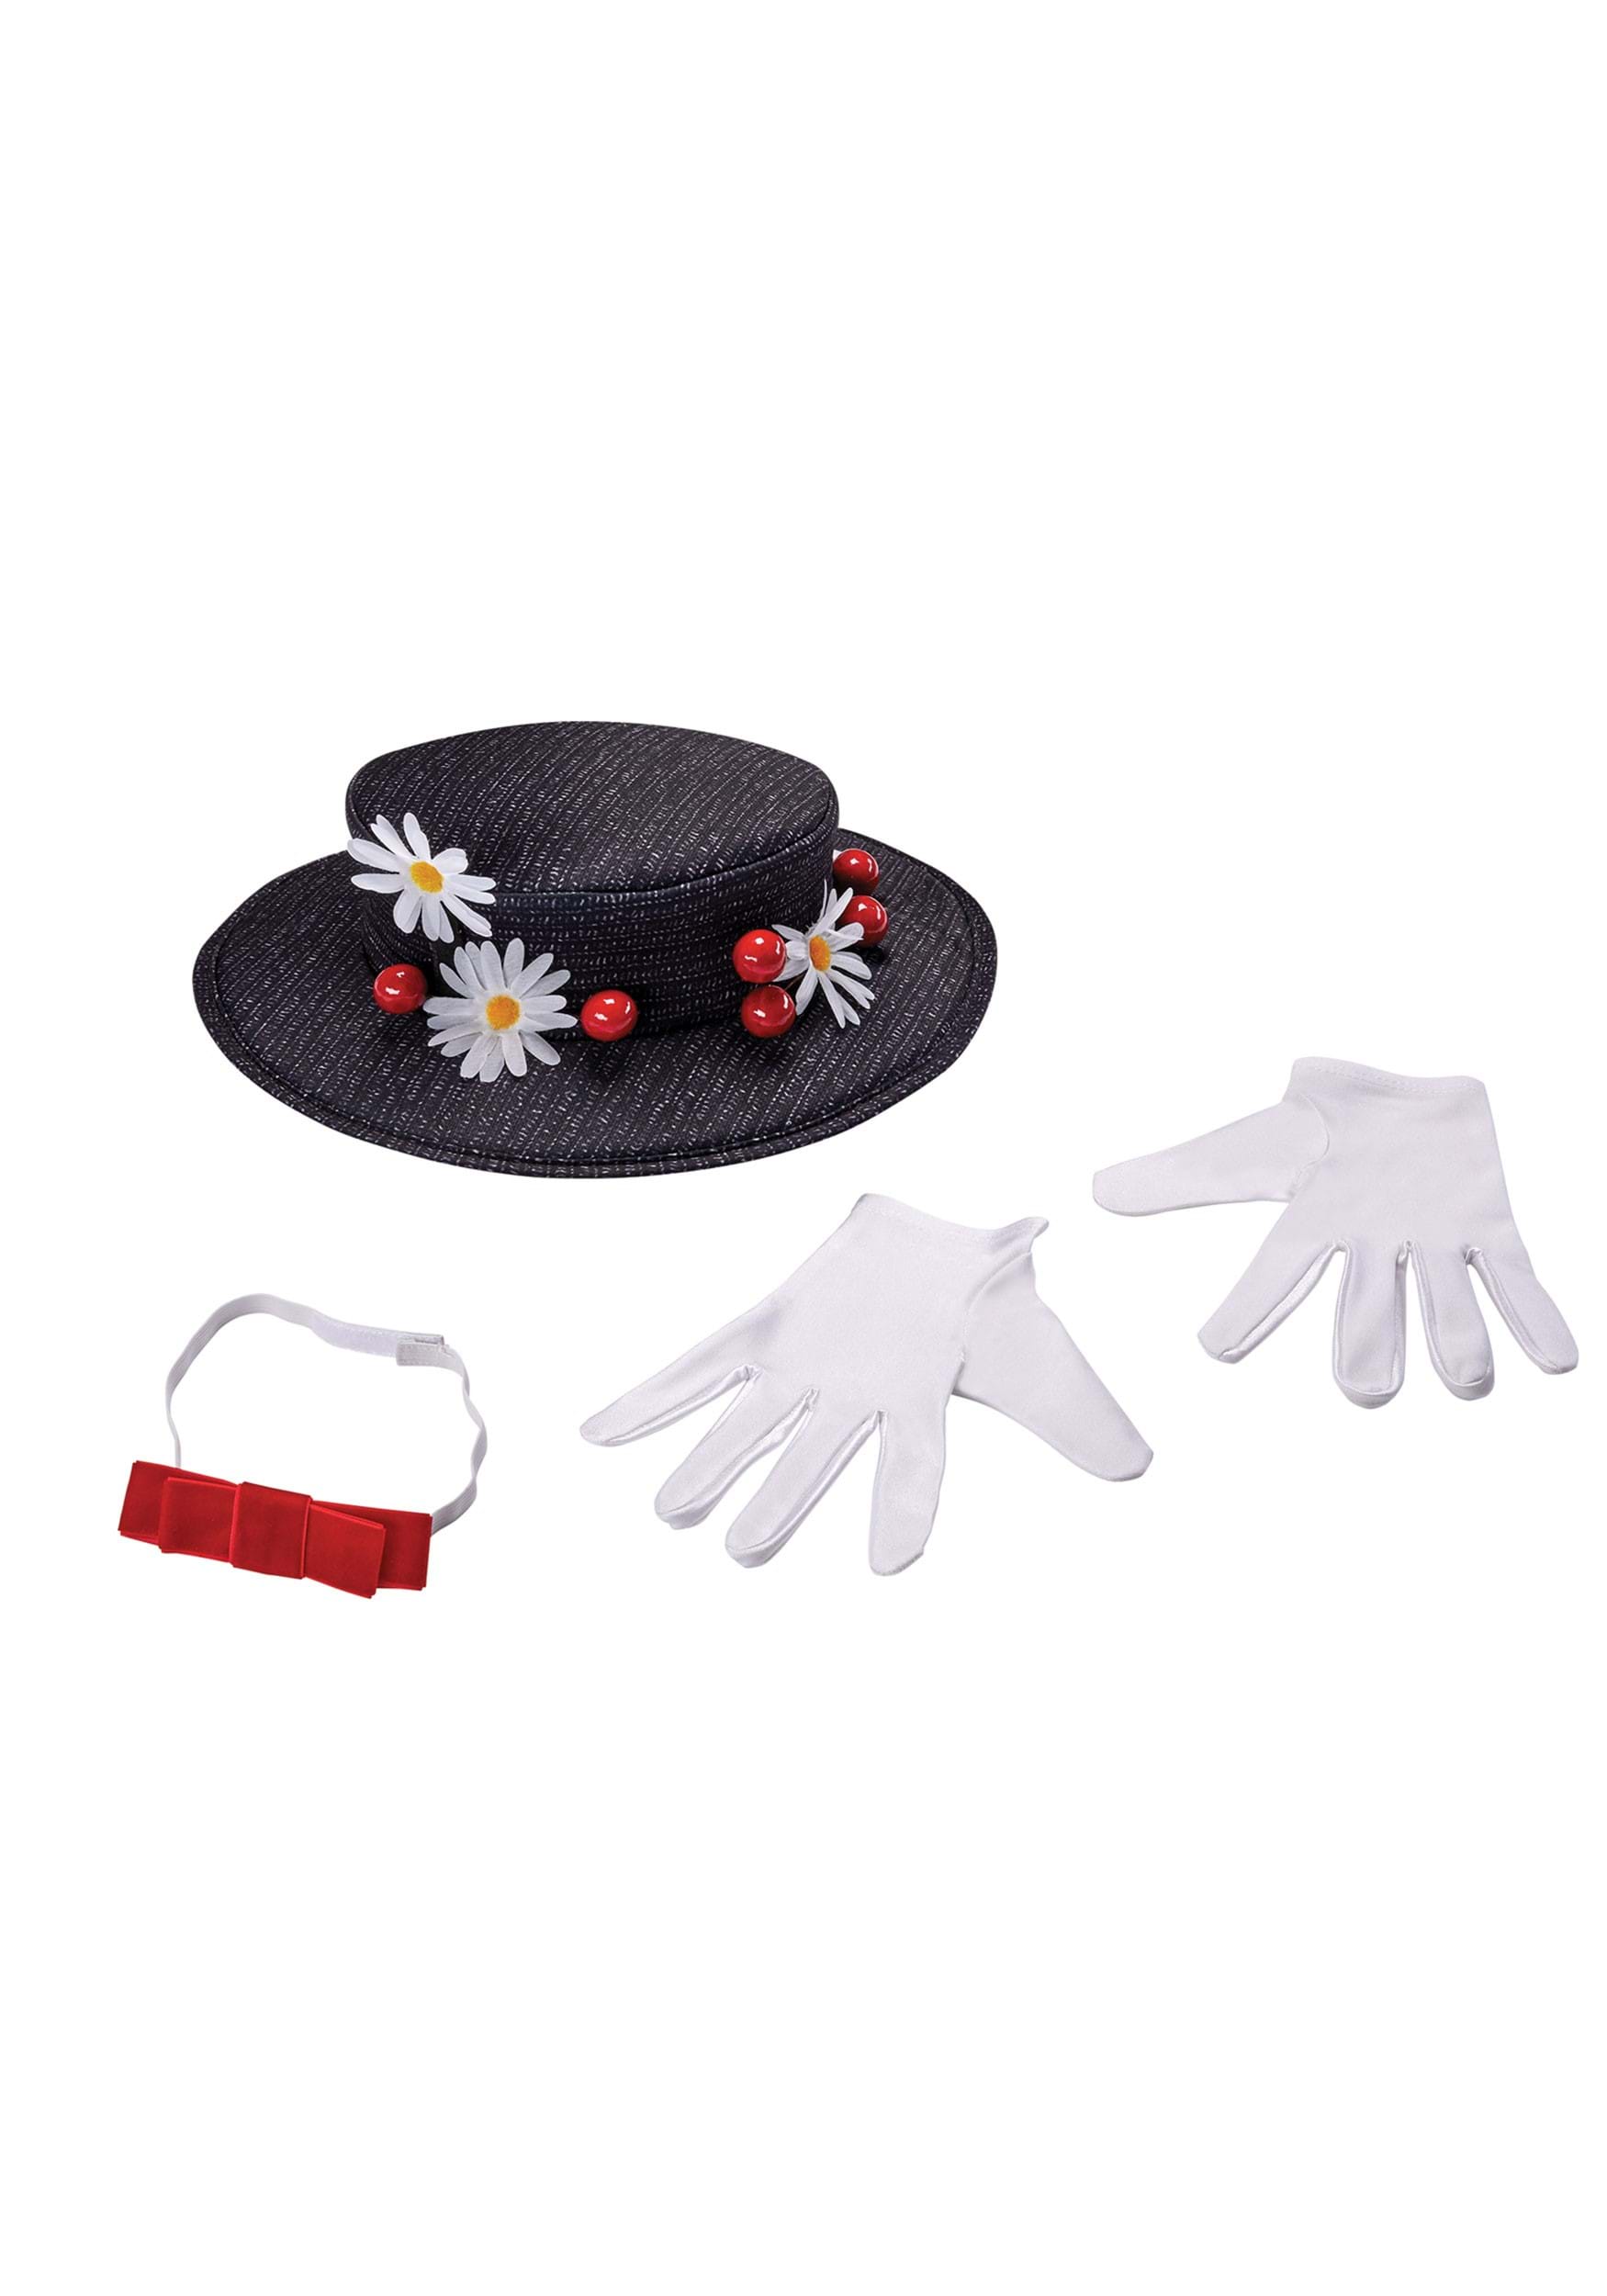 Women's Mary Poppins Costume Kit , Disney Accessories